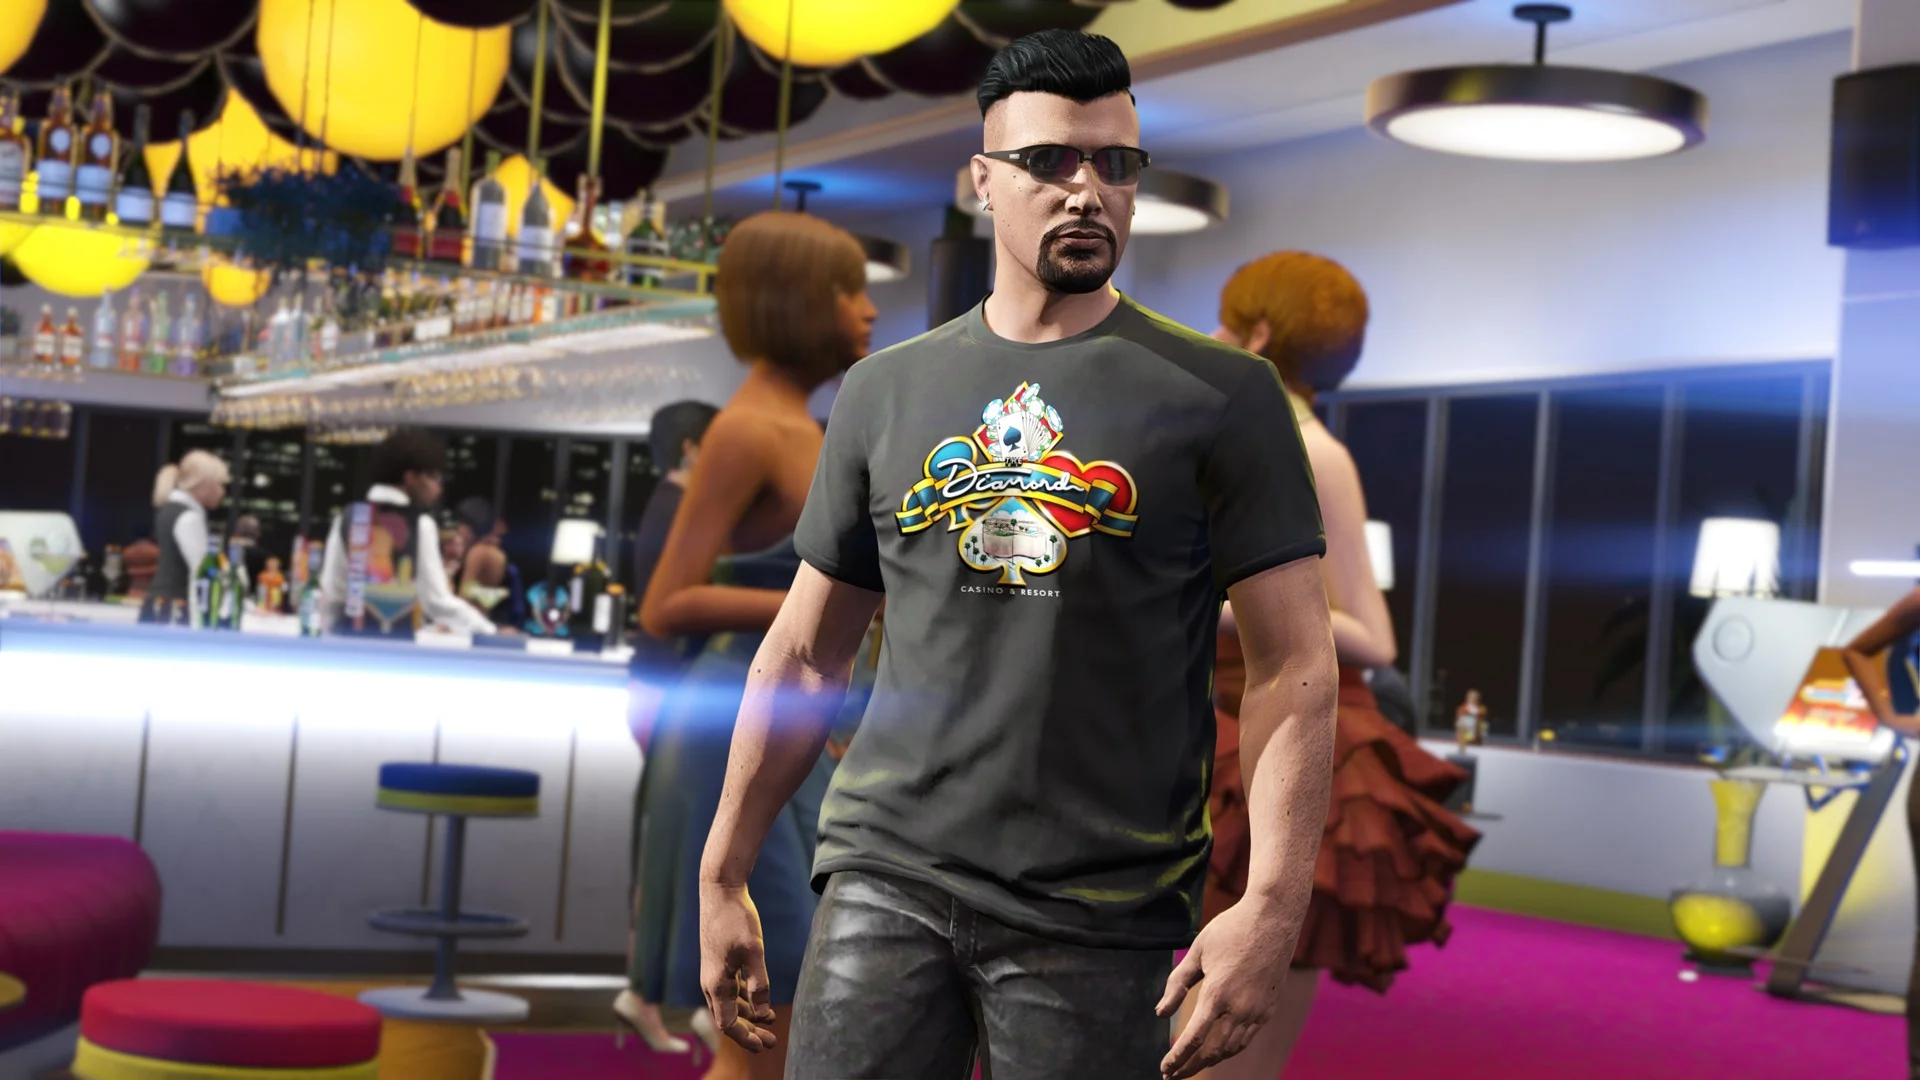 Rockstar представила четыре уровня программы Diamond для Grand Theft Auto Online - фото 2